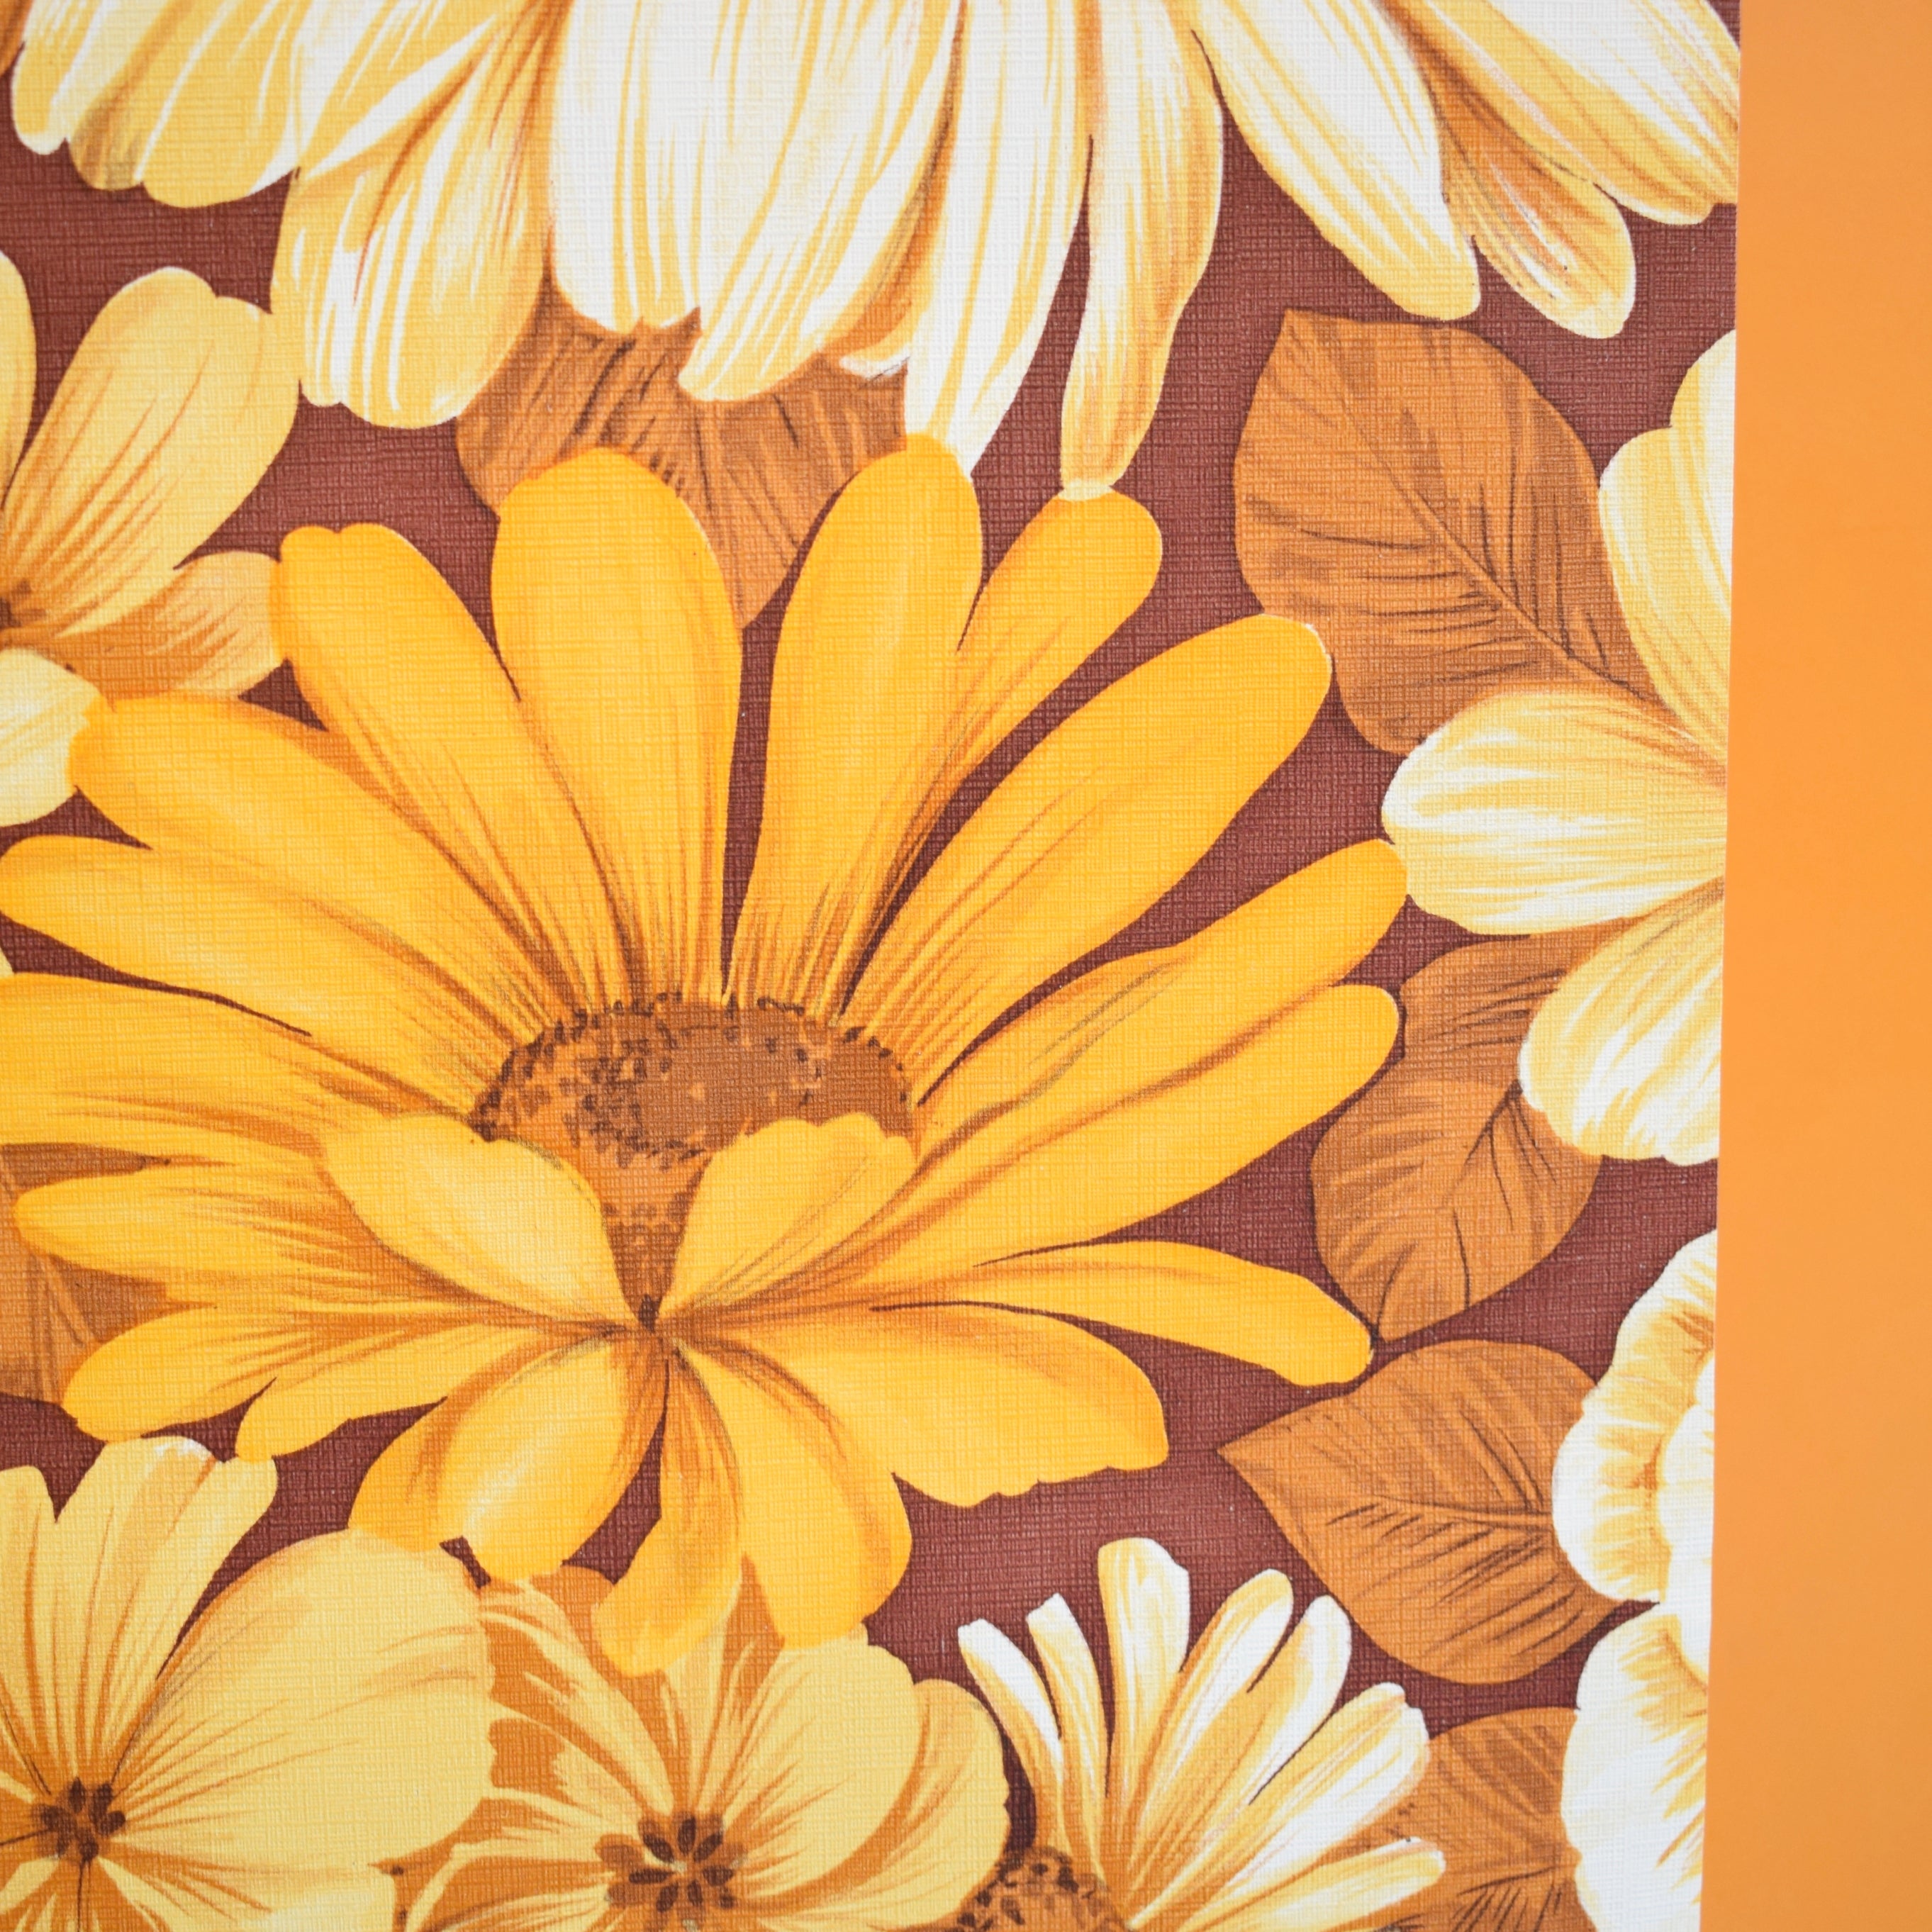 Aesthetic Yellow Wallpapers - Top 25 Best Aesthetic Yellow Backgrounds